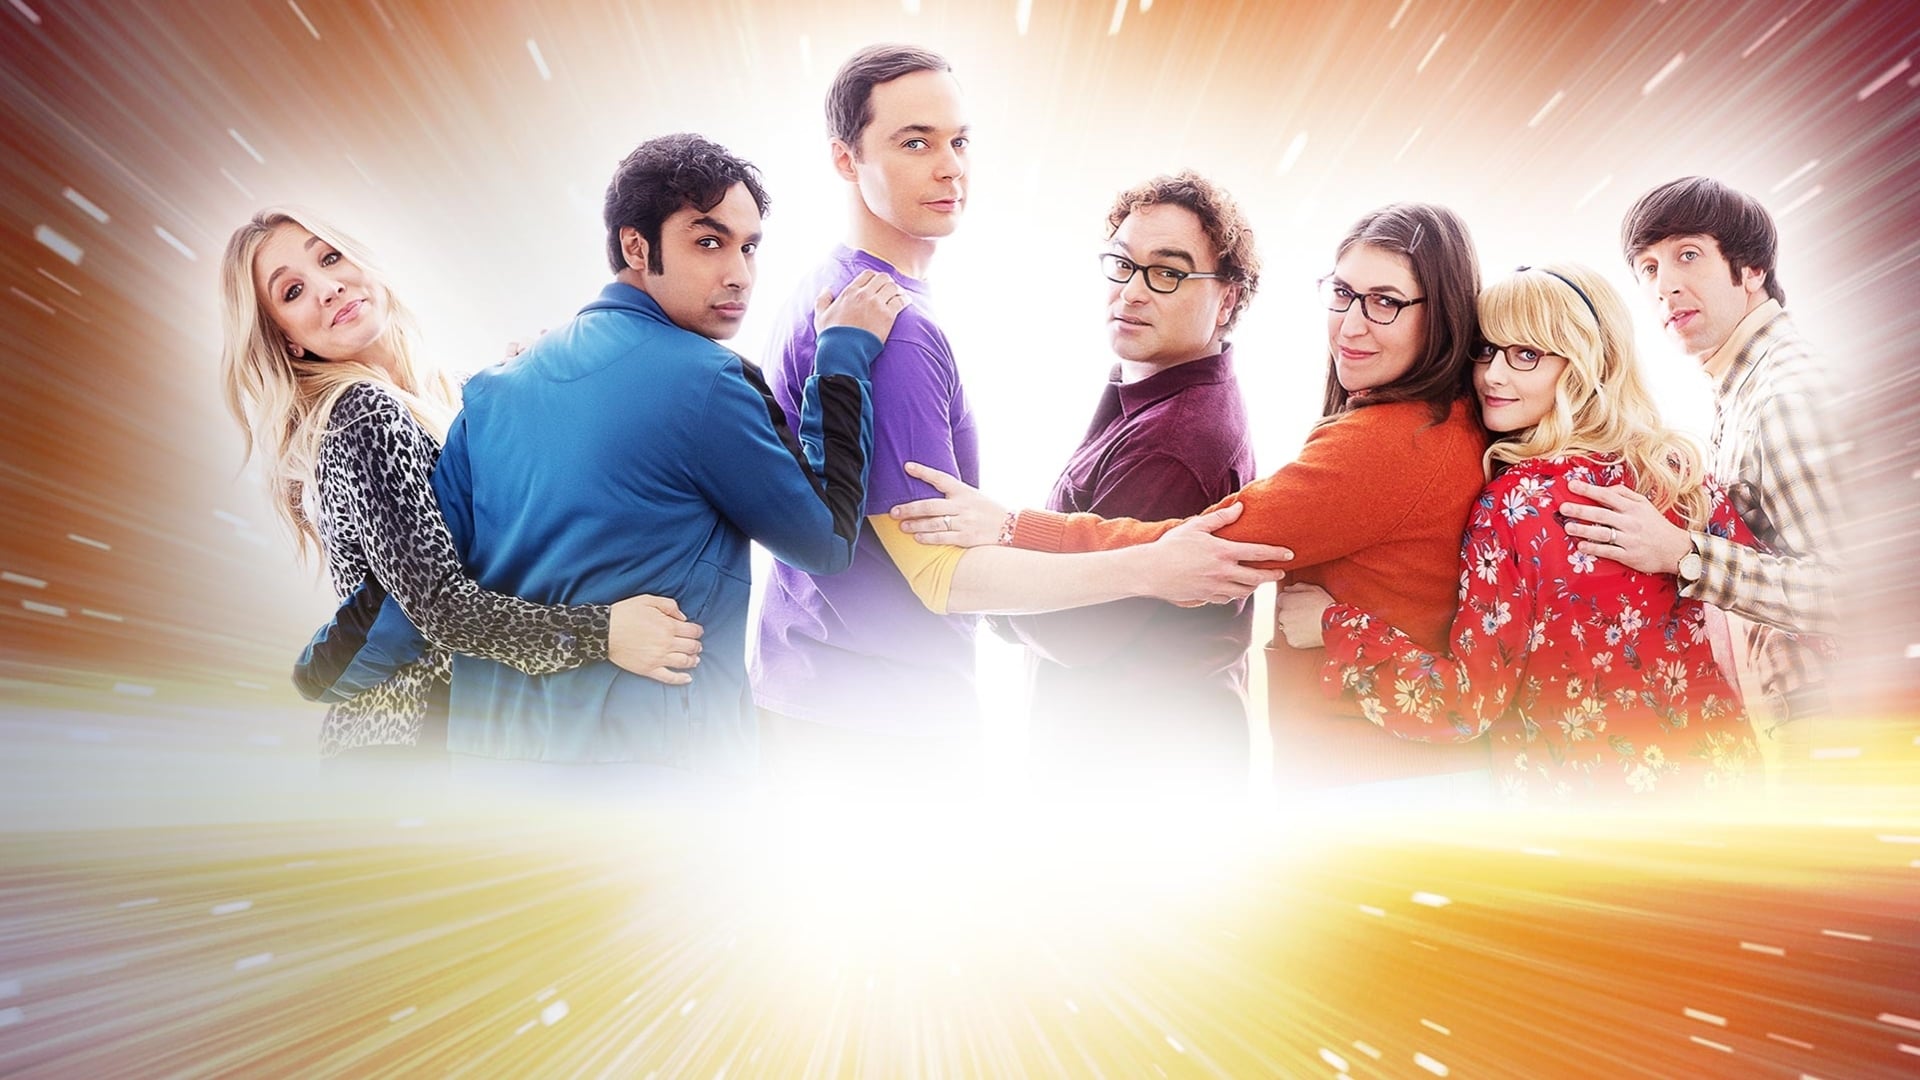 The Big Bang Theory Season 9 (2015) ทฤษฎีวุ่นหัวใจ